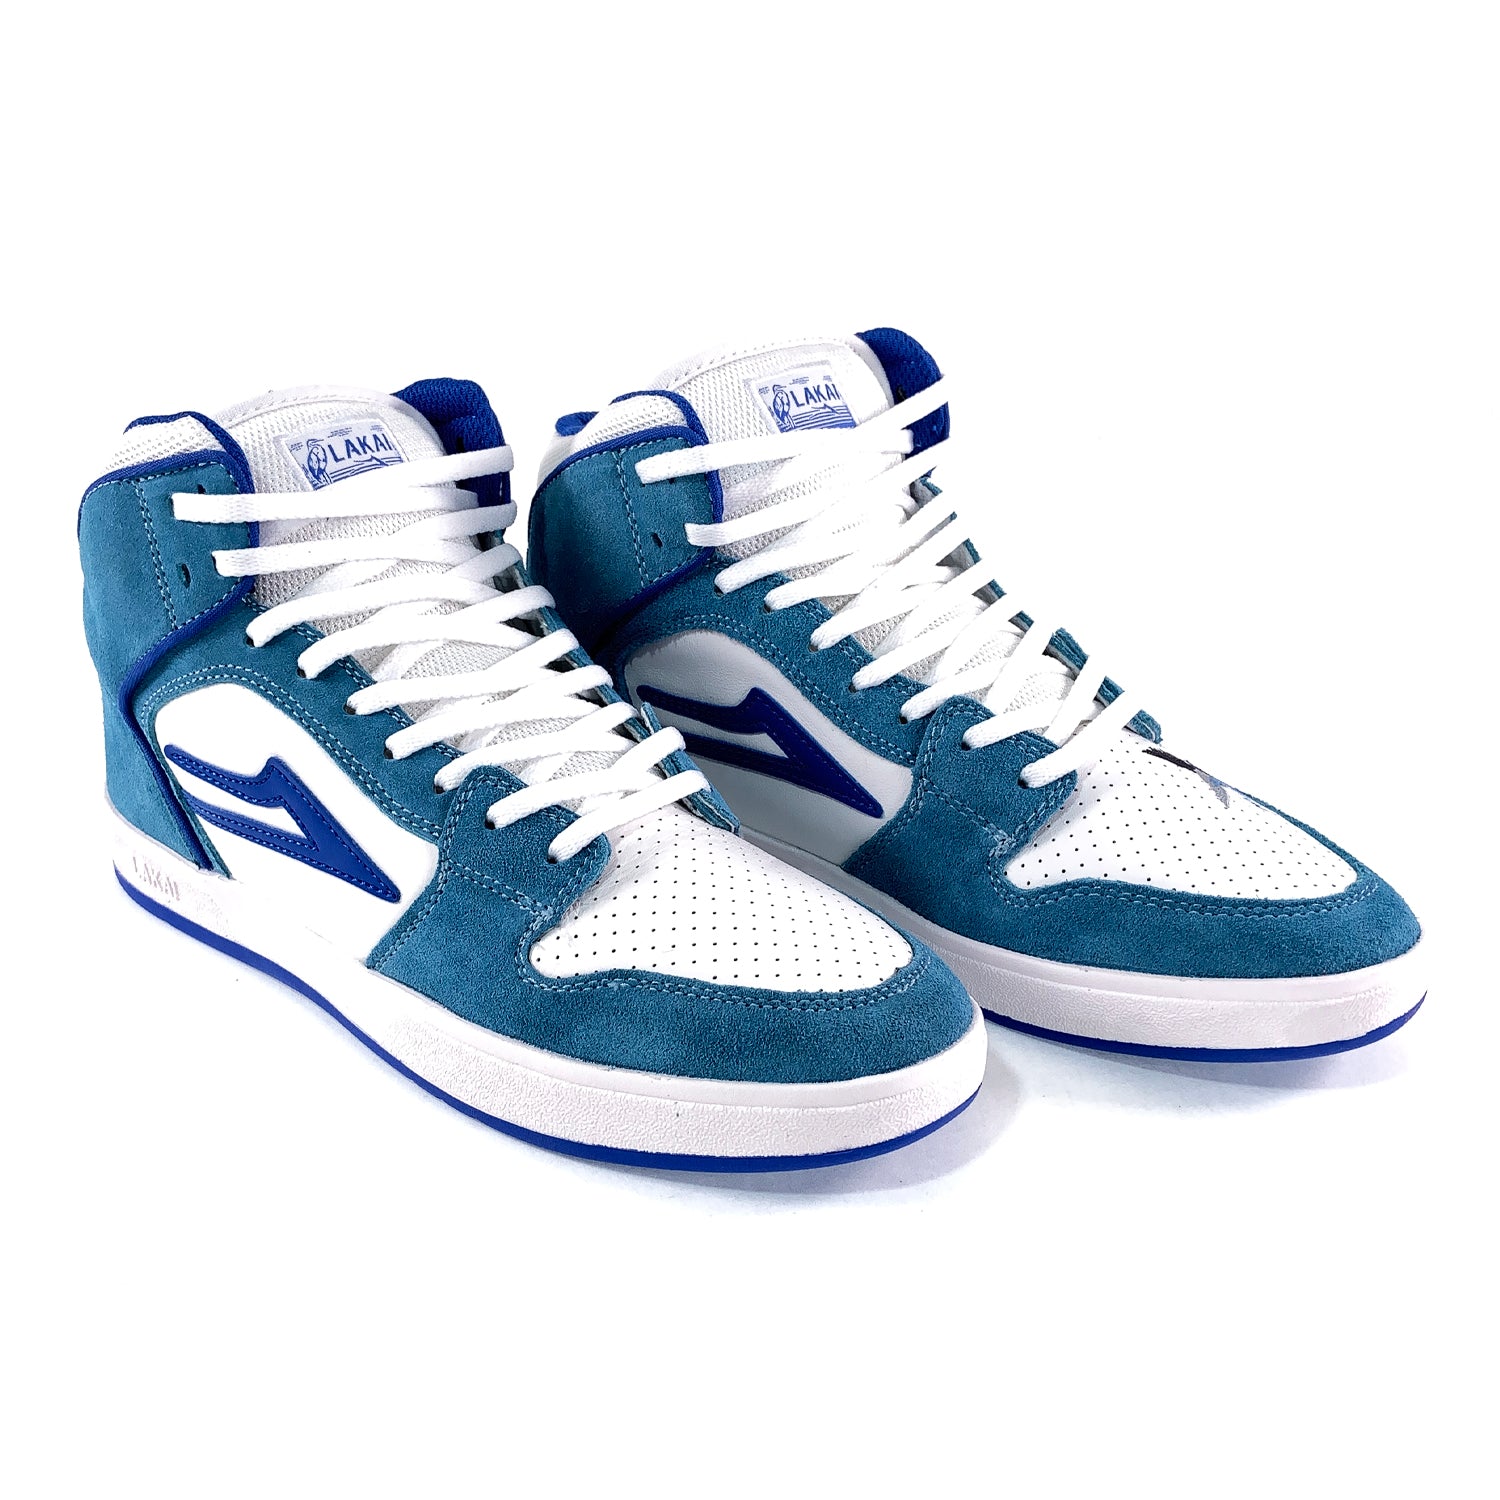 Lakai Telford Shoe - Light Blue Suede - Prime Delux Store